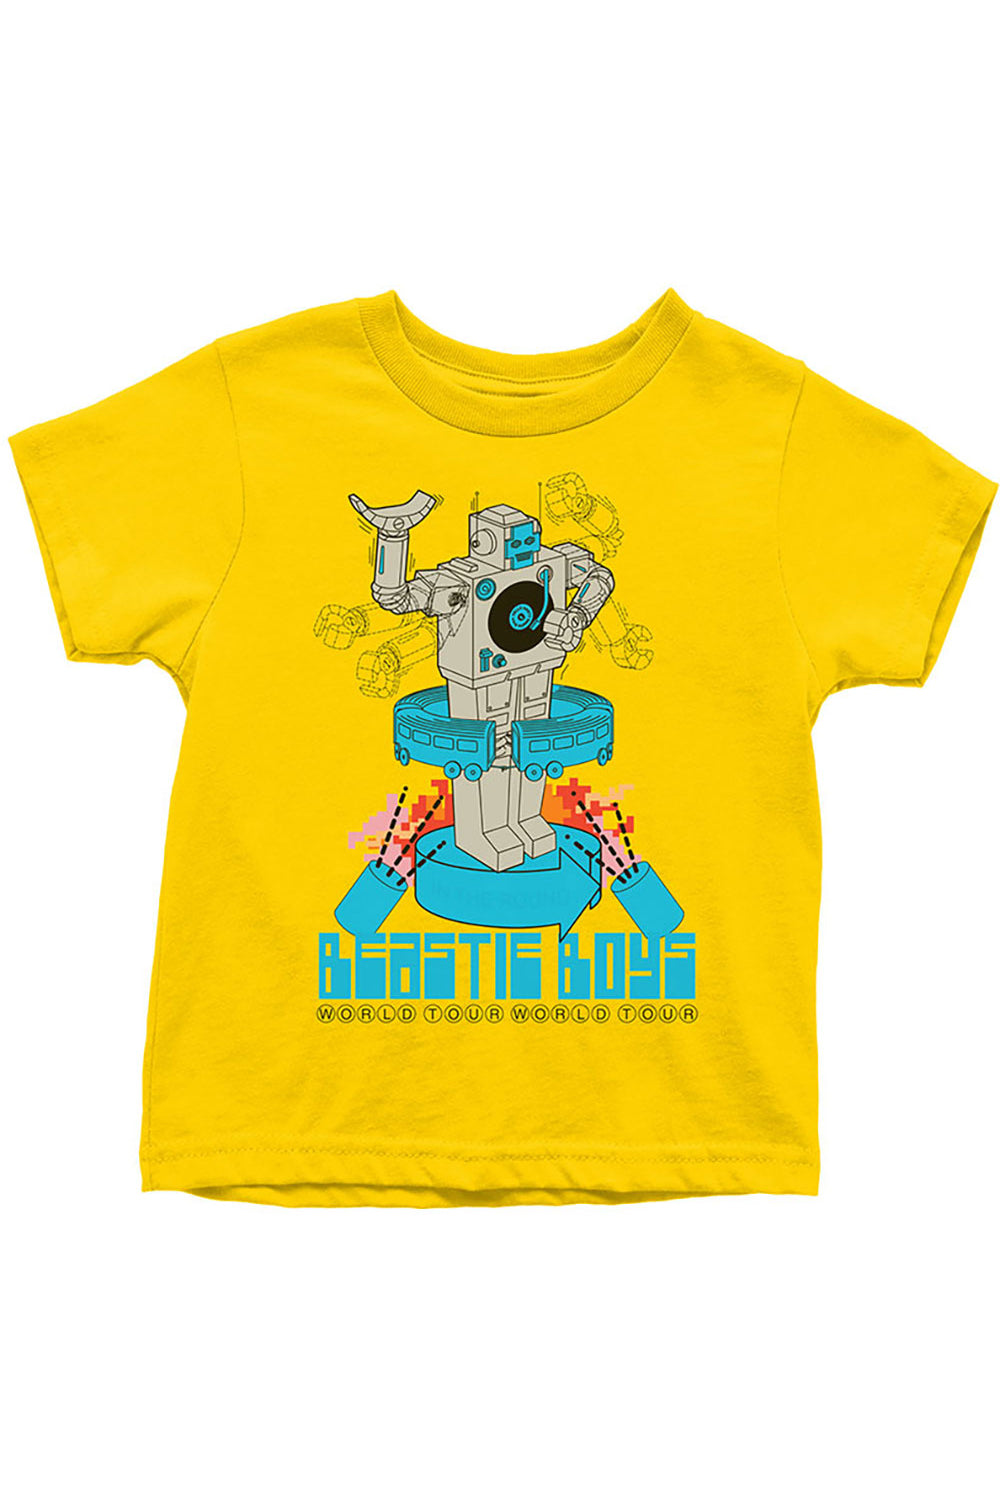 The Beastie Boys robot kid's t-shirt.